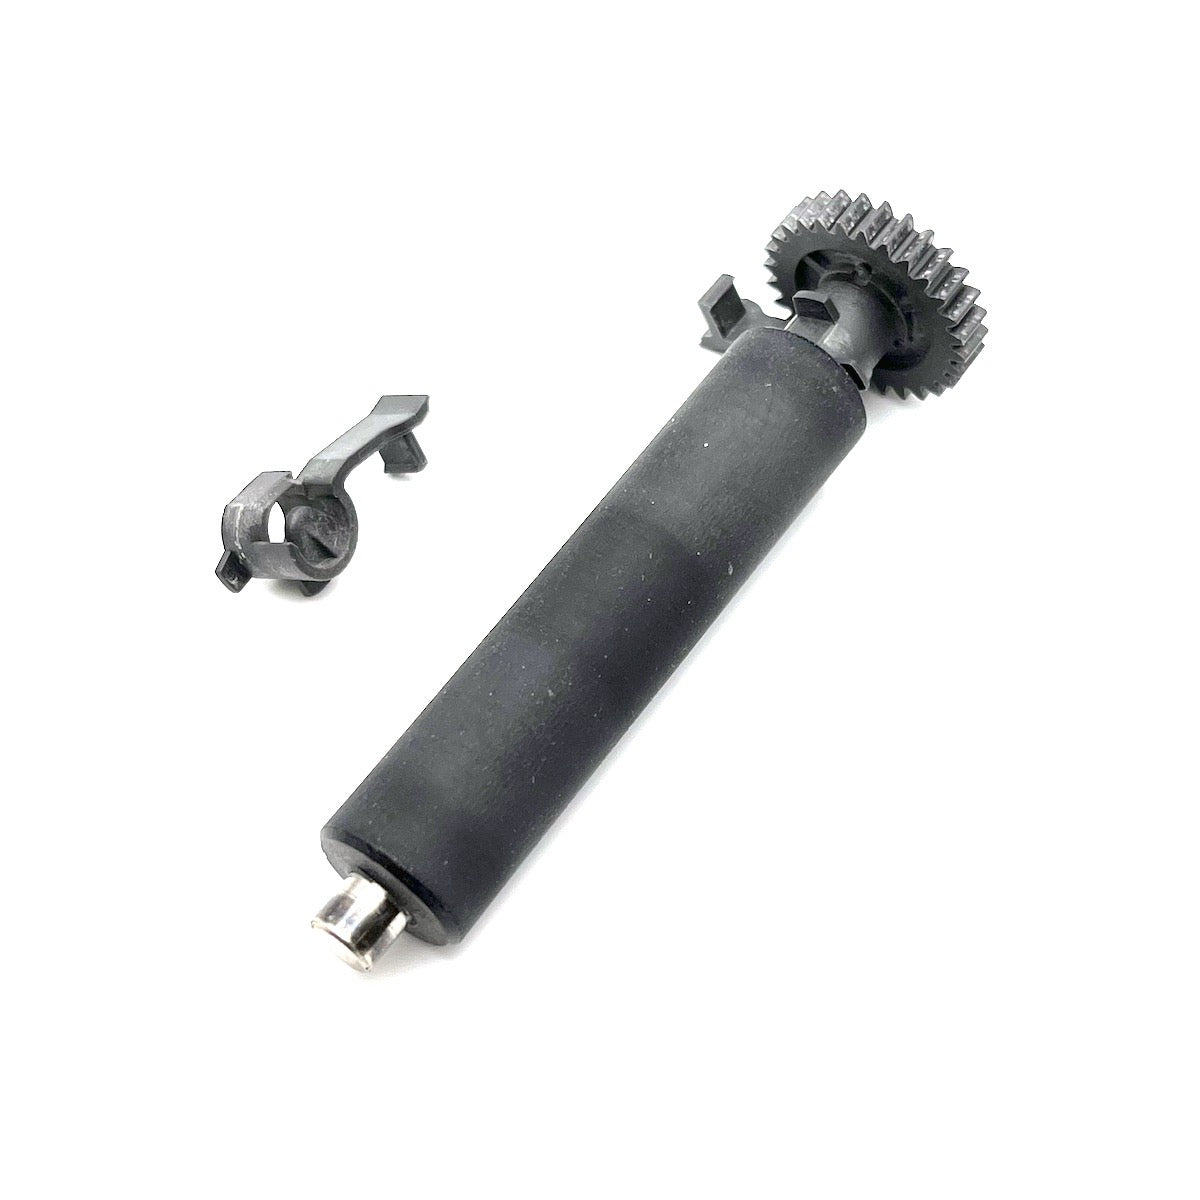 Platen Roller for Zebra ZD410 grey P1079903-003 part used